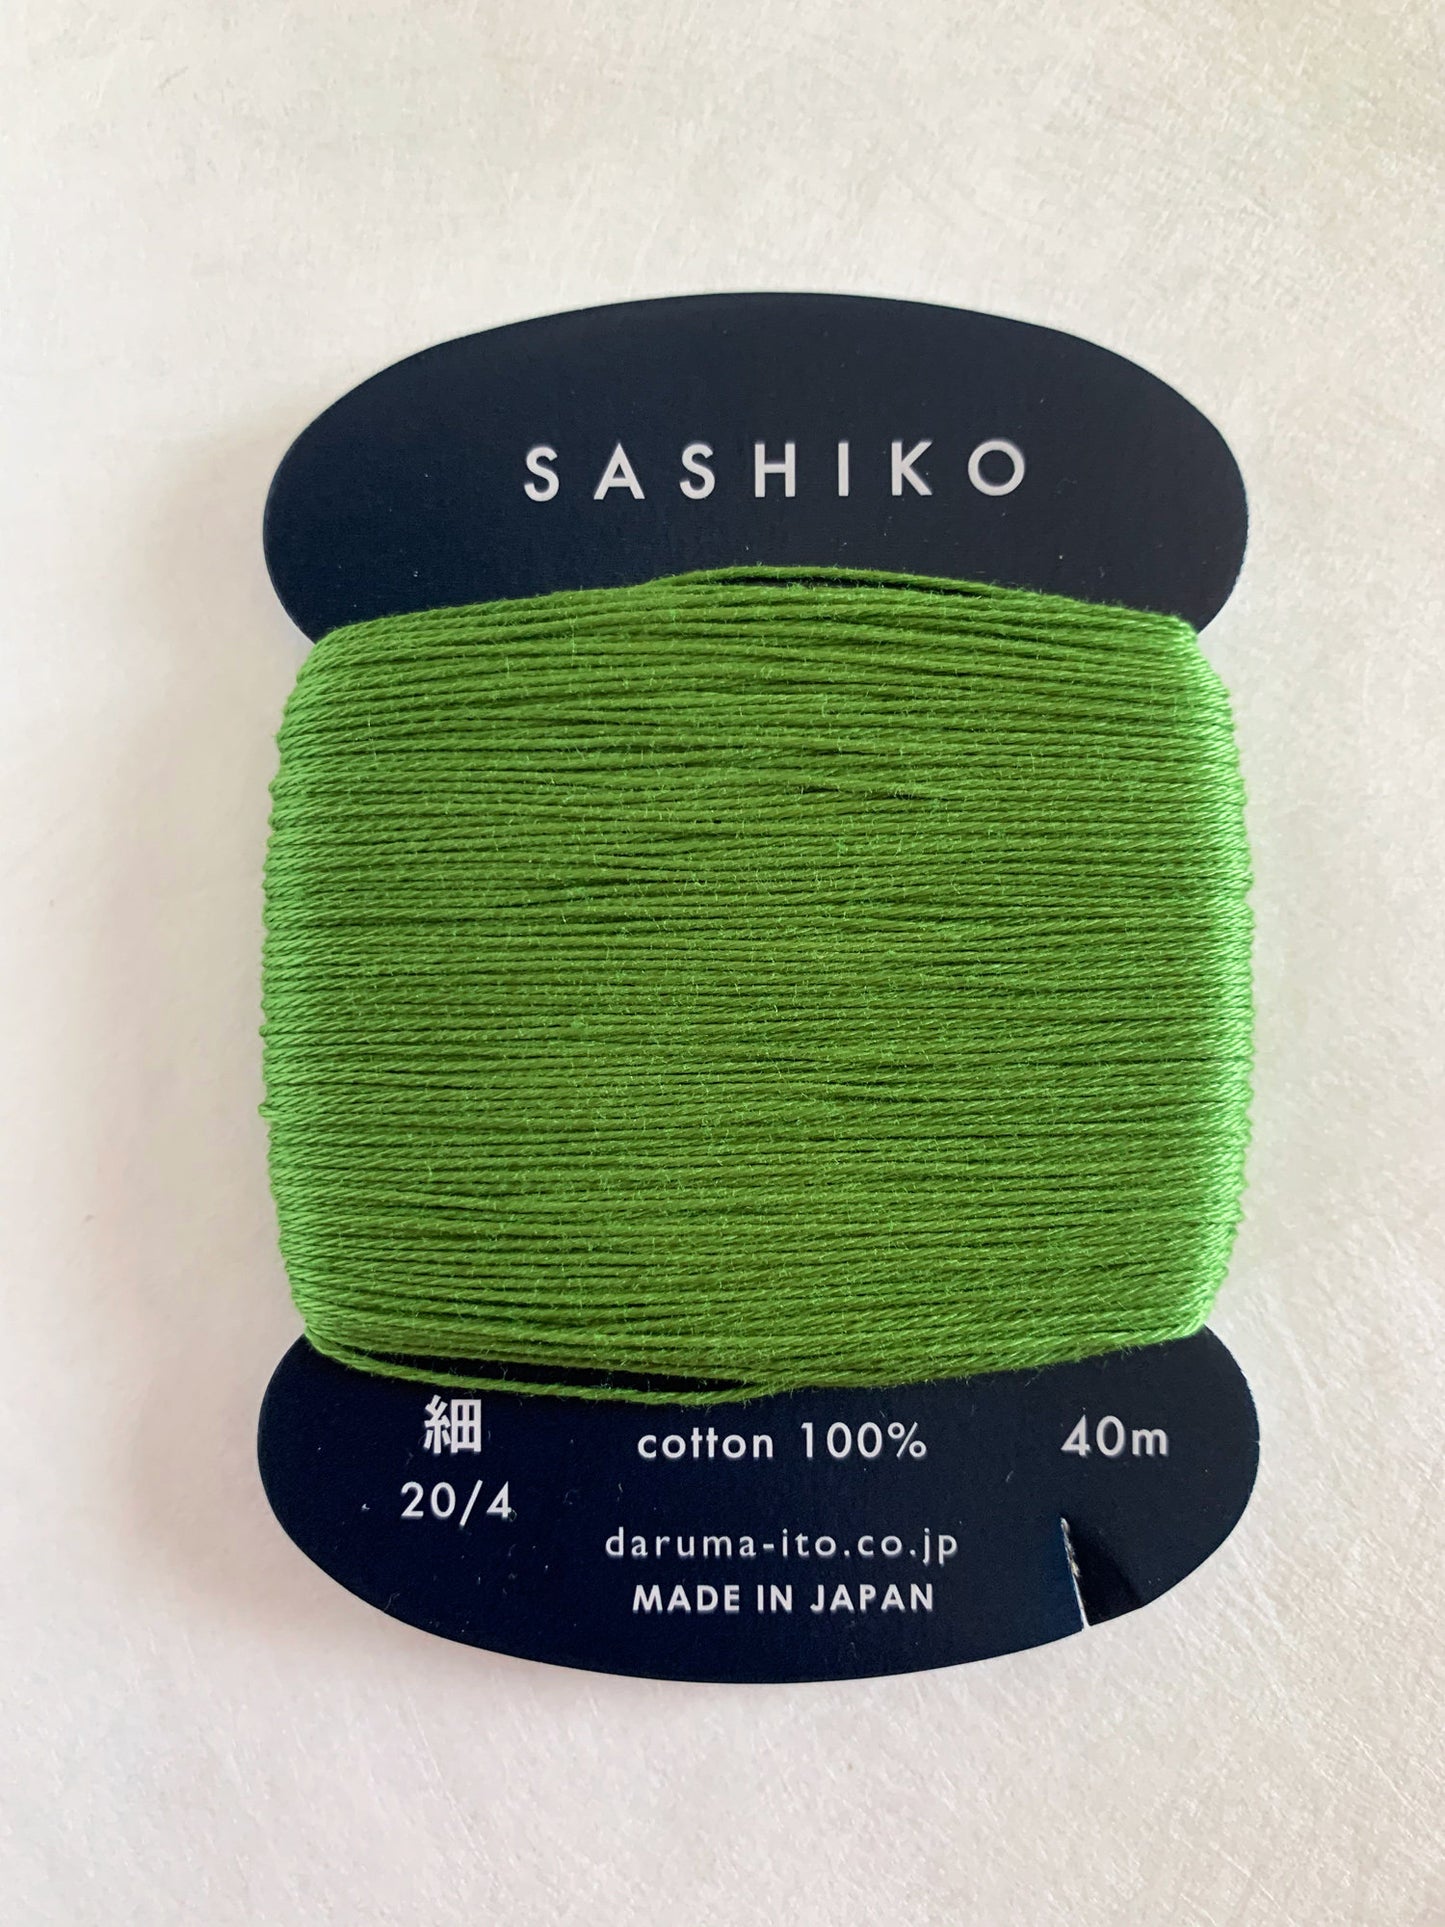 Daruma #227 SPRING GREEN Japanese Cotton SASHIKO thread 40 meter skein 20/4 萌黄